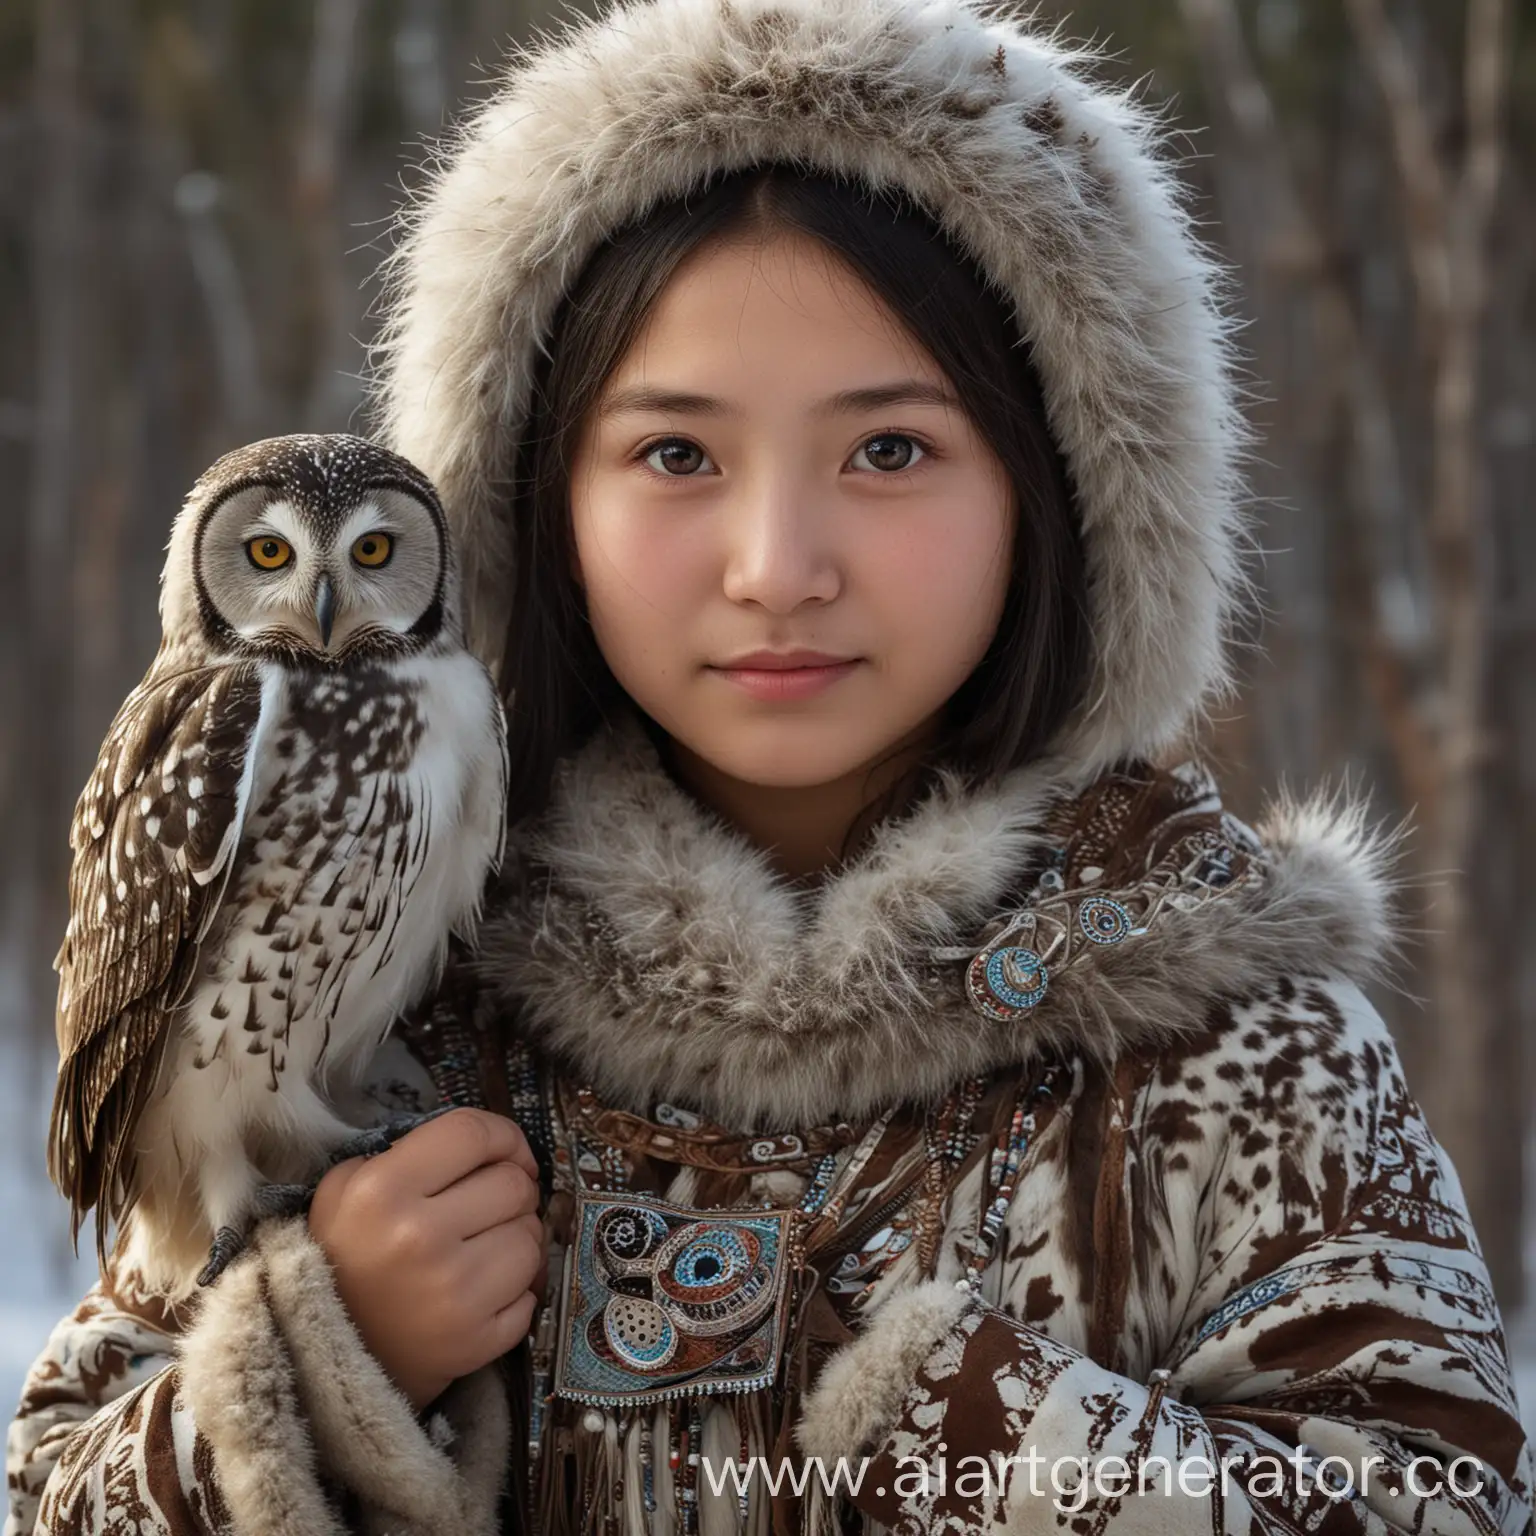 Yakutian-Girl-Holding-Owl-in-Snowy-Landscape